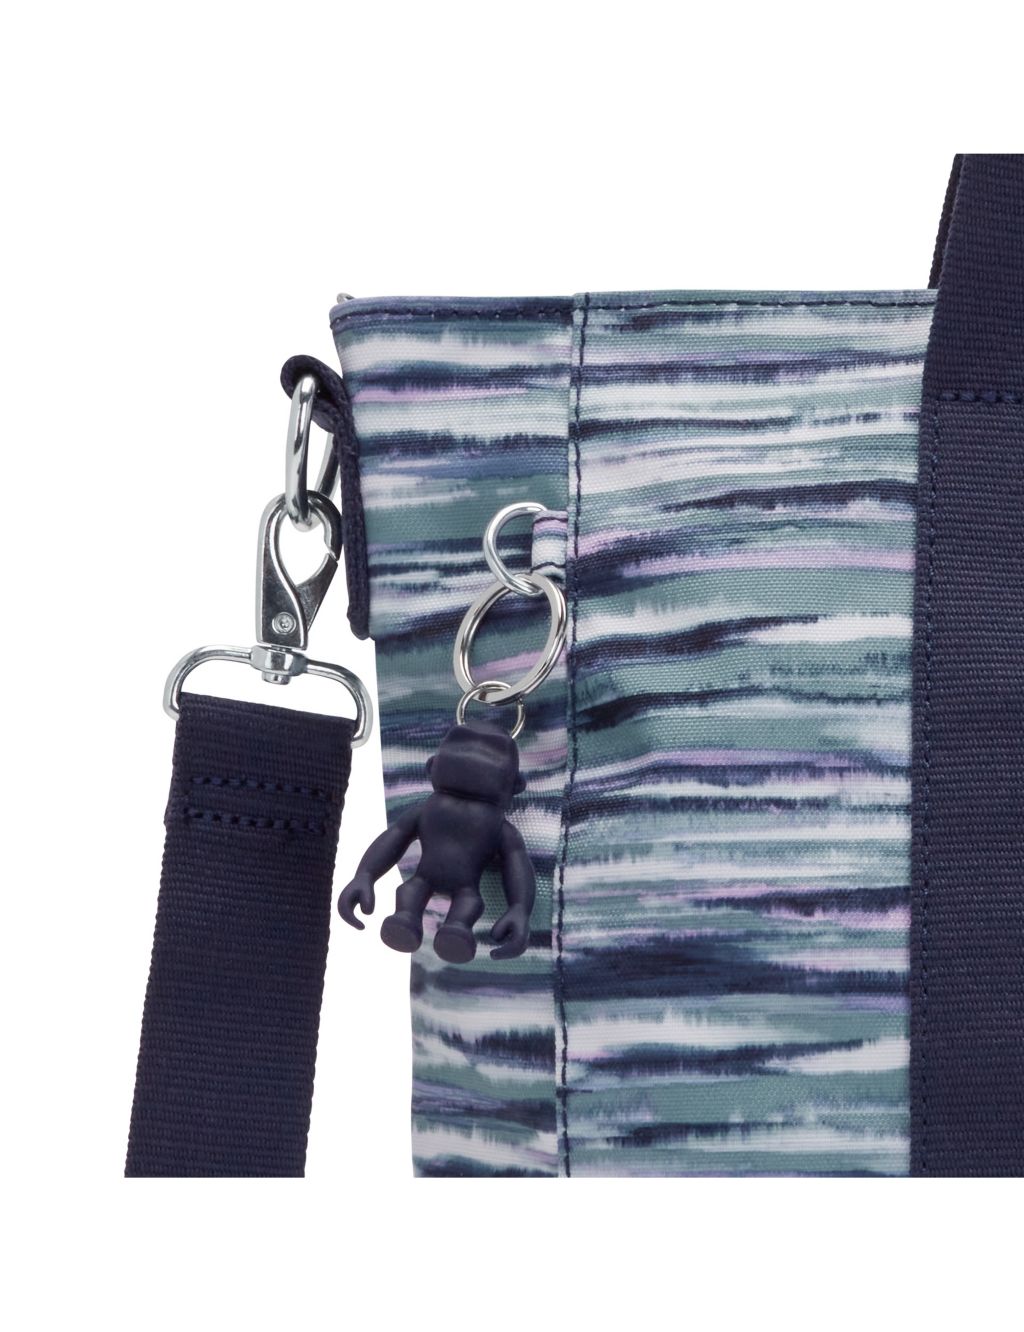 Asseni Striped Tote Bag image 4